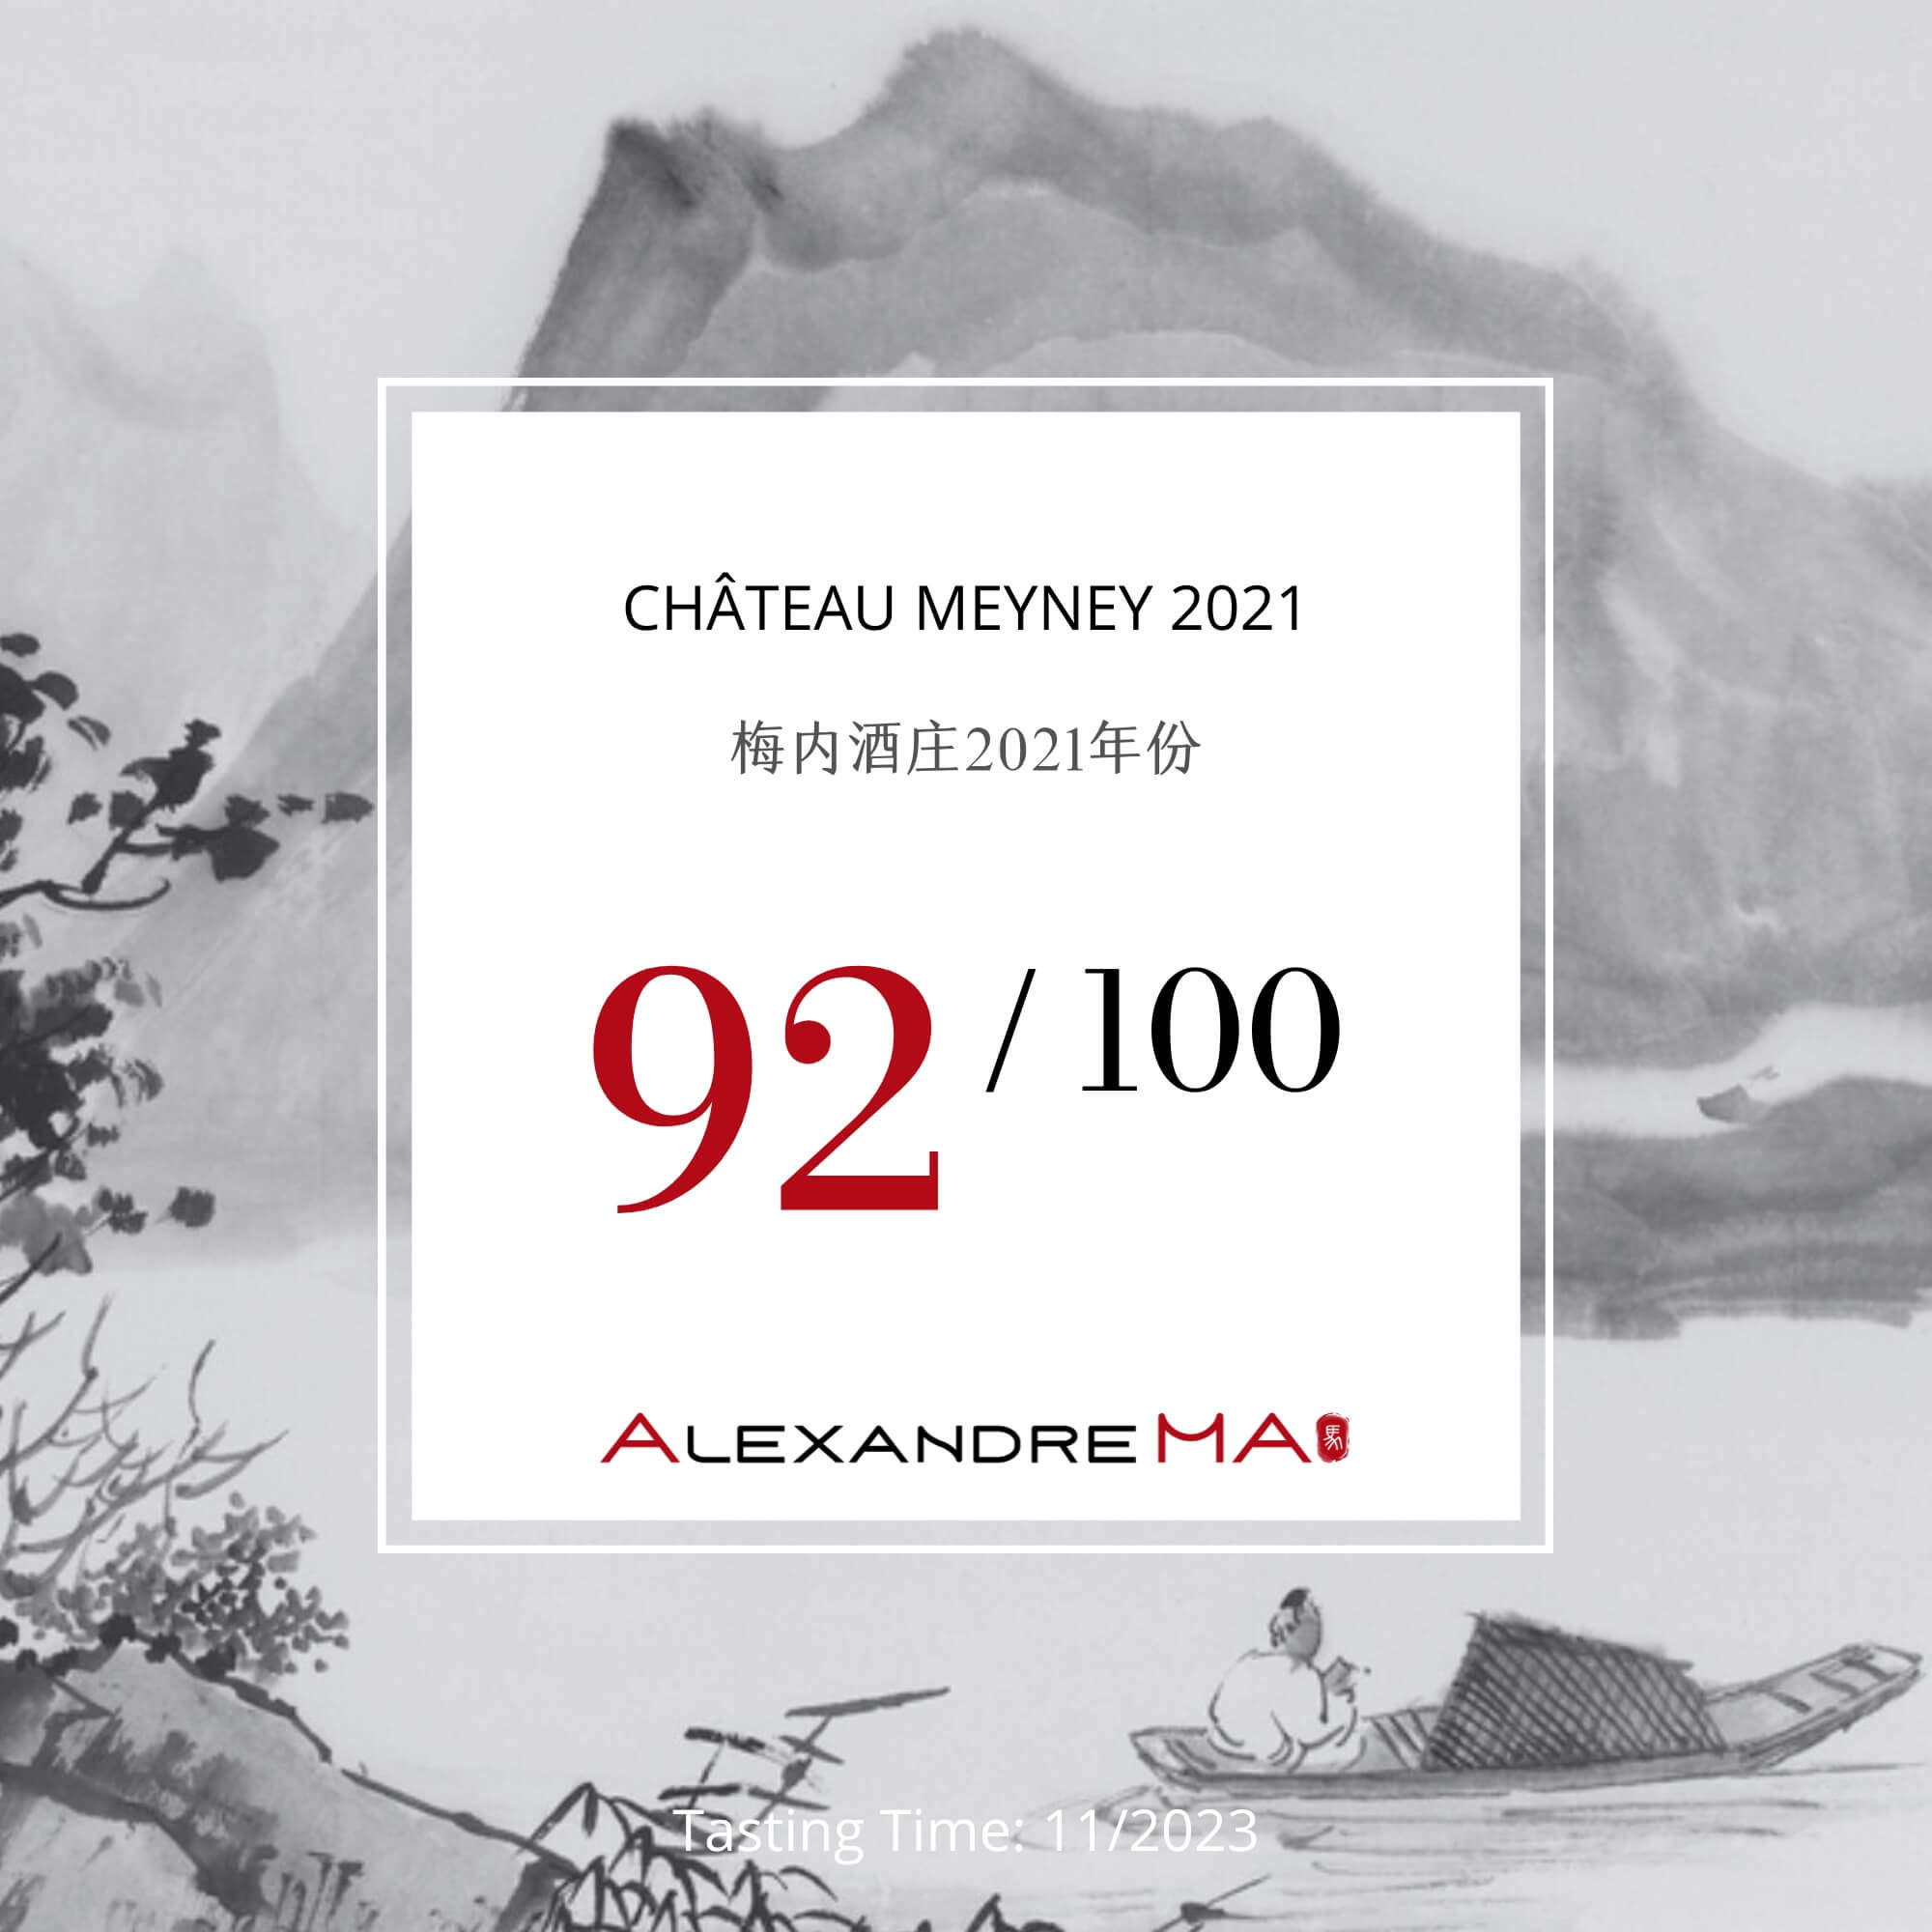 Château Meyney 2021 - Alexandre MA